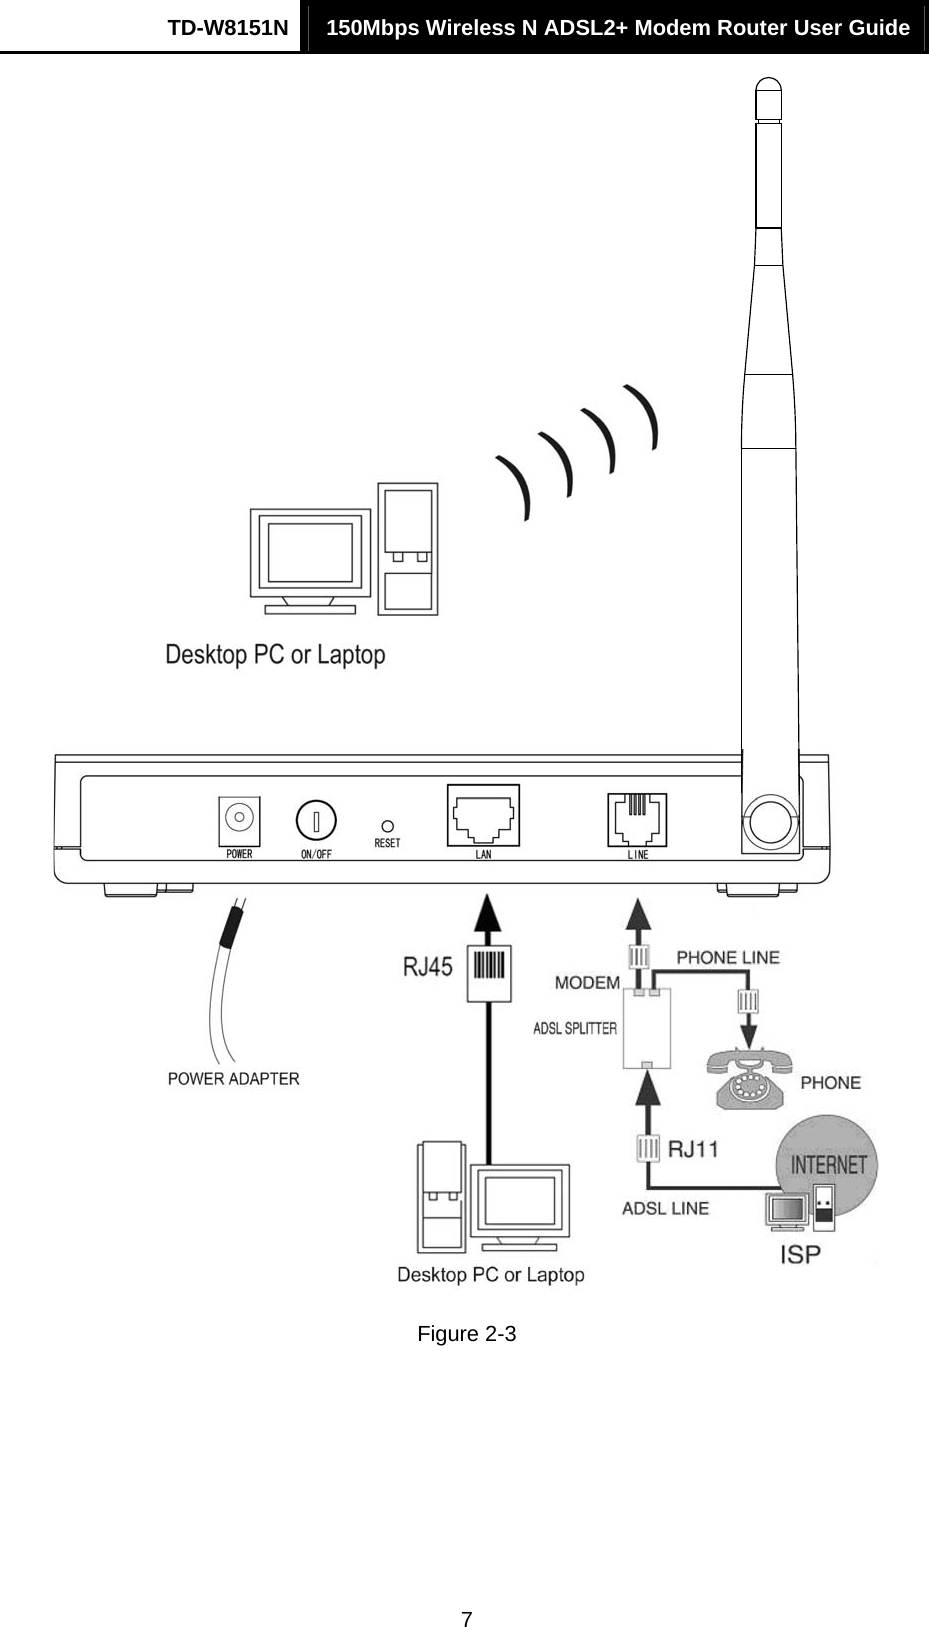 TD-W8151N  150Mbps Wireless N ADSL2+ Modem Router User Guide  7 Figure 2-3 